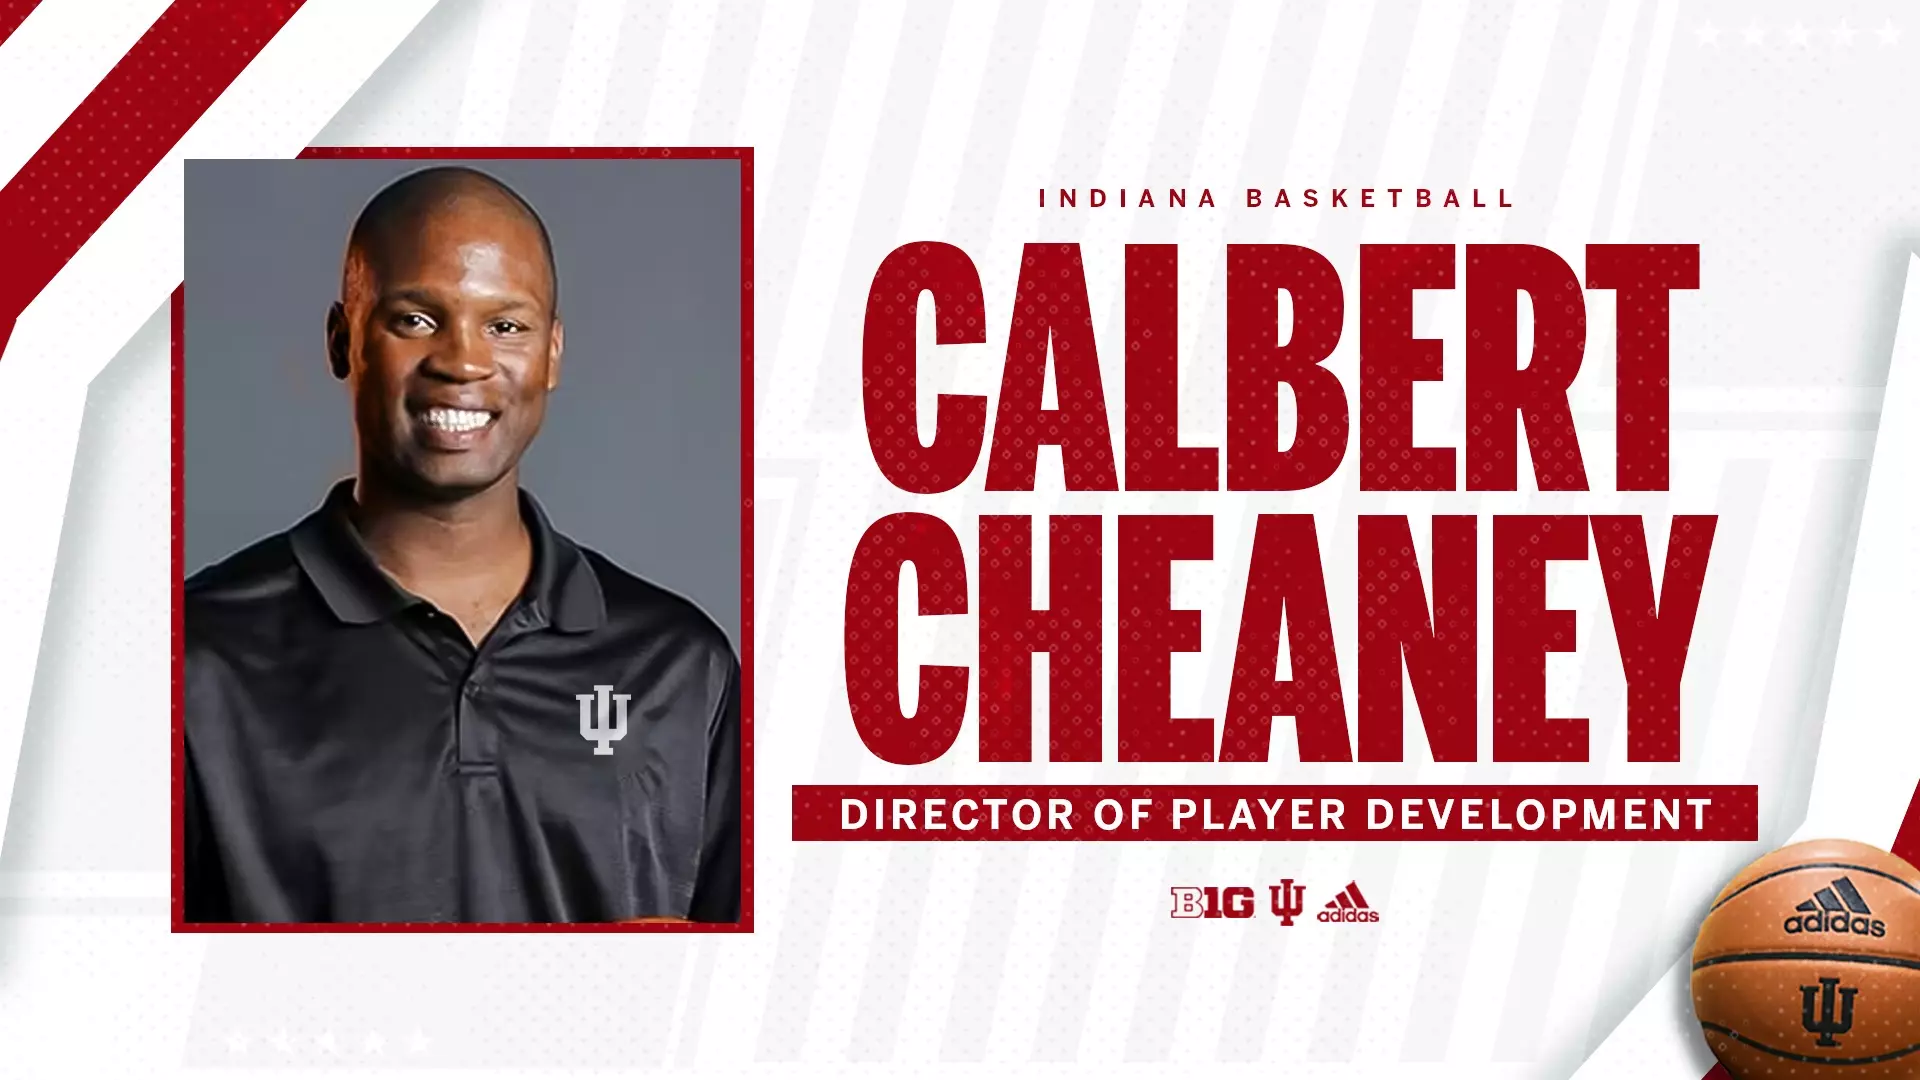 IU Hall of Famer Calbert Cheaney To Join IU Men’s Basketball Staff As Director of Player Development